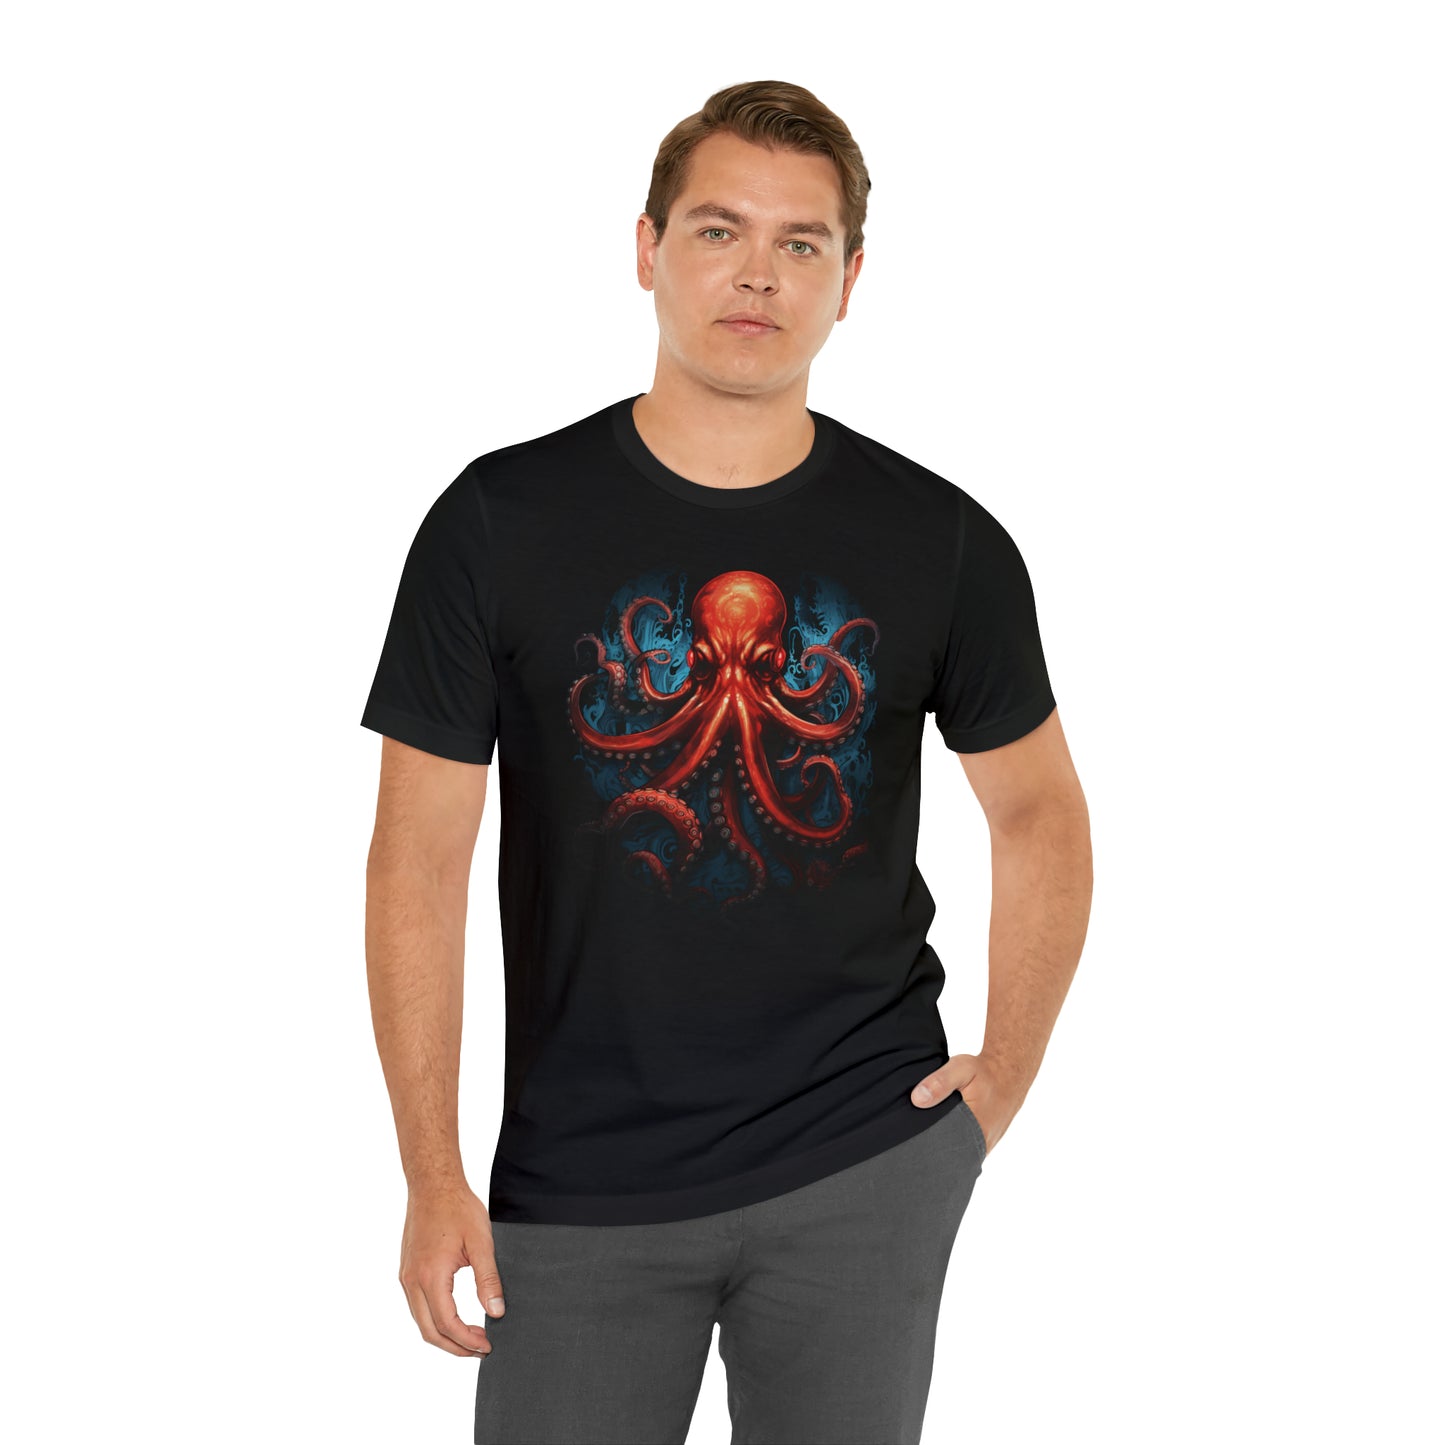 Octopus Tshirt, Kraken Men Women Adult Aesthetic Graphic Crewneck Short Sleeve Tee Shirt Top Starcove Fashion